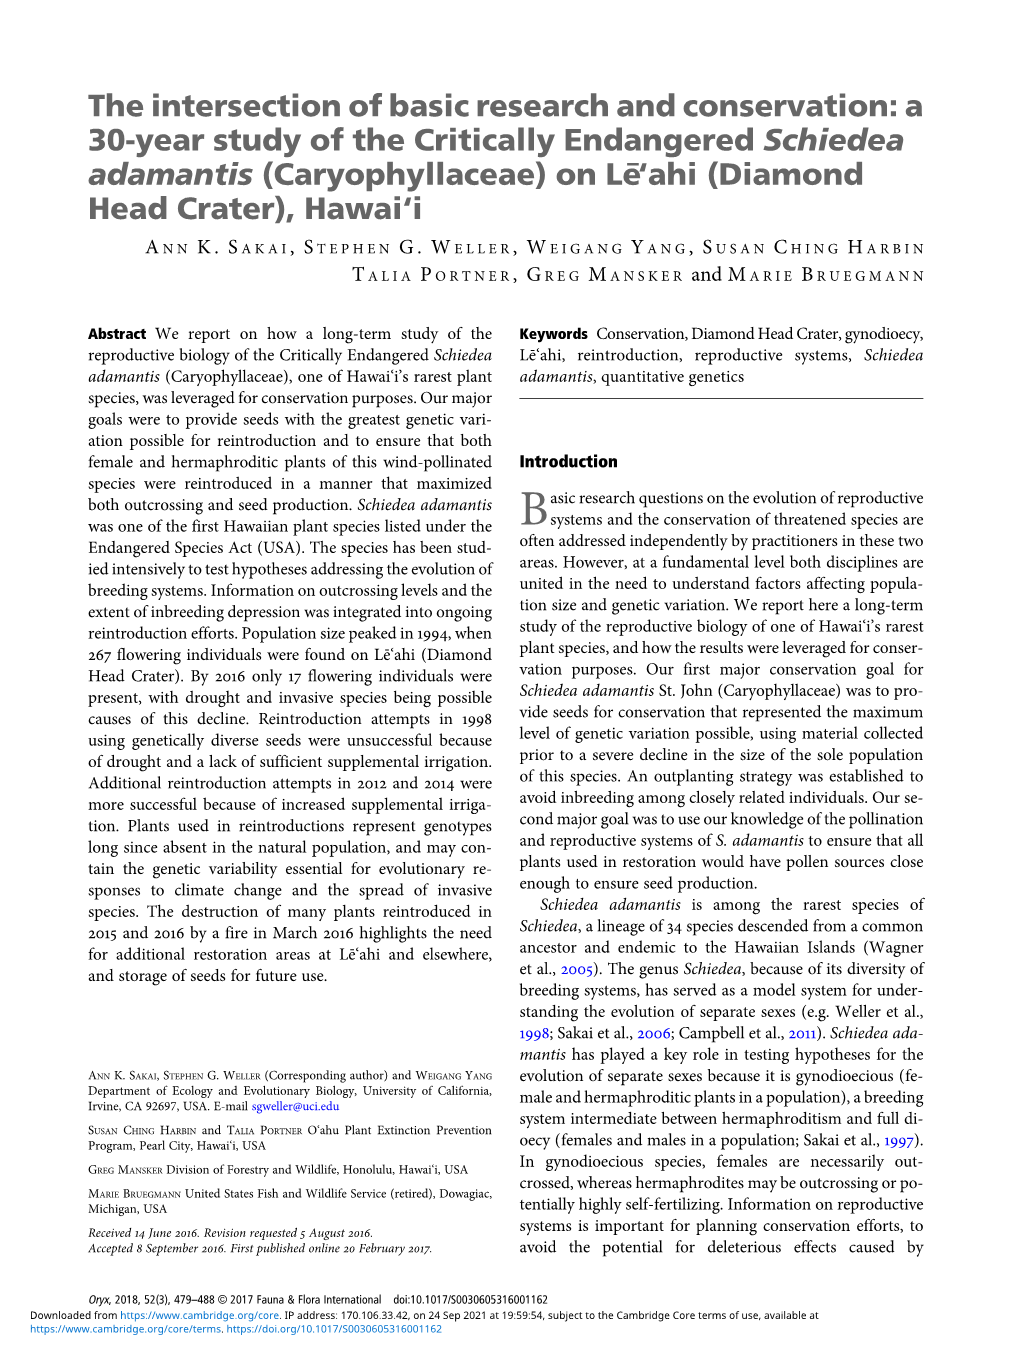 A 30-Year Study of the Critically Endangered Schiedea Adamantis (Caryophyllaceae) on Le¯‘Ahi (Diamond Head Crater), Hawai‘I